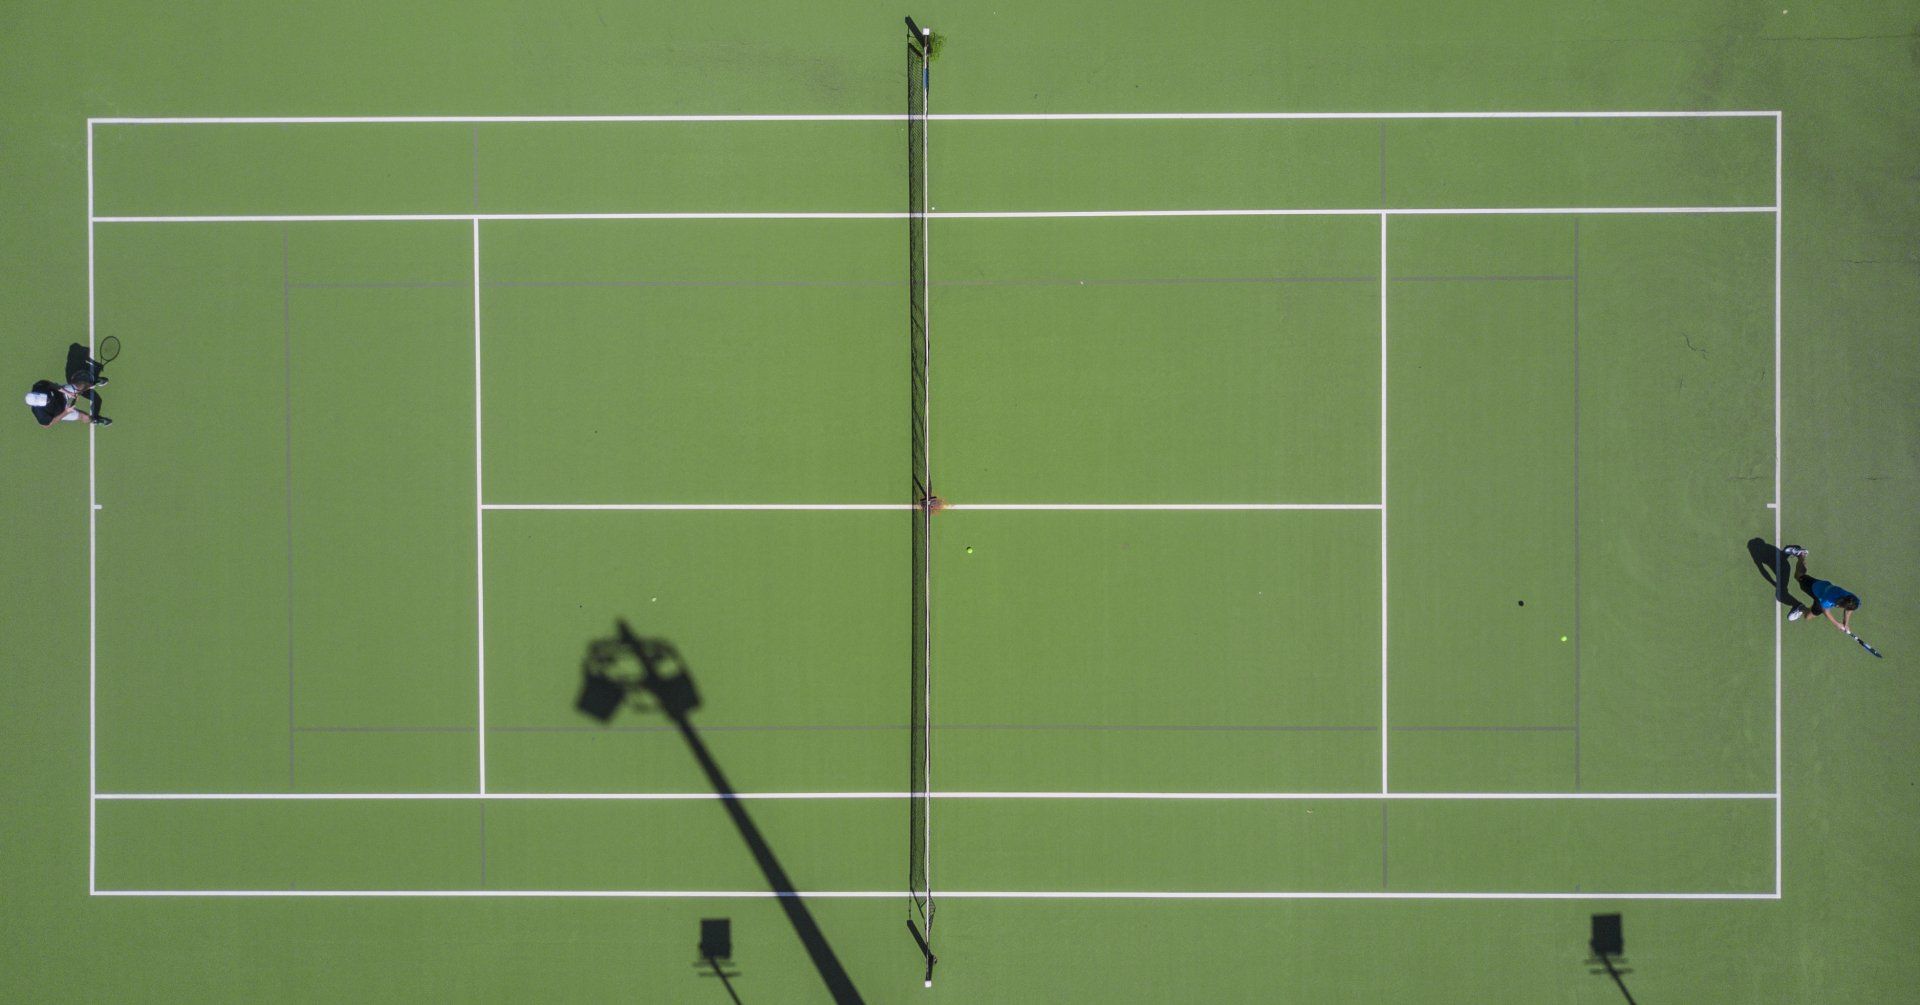 a tennis court seen from above